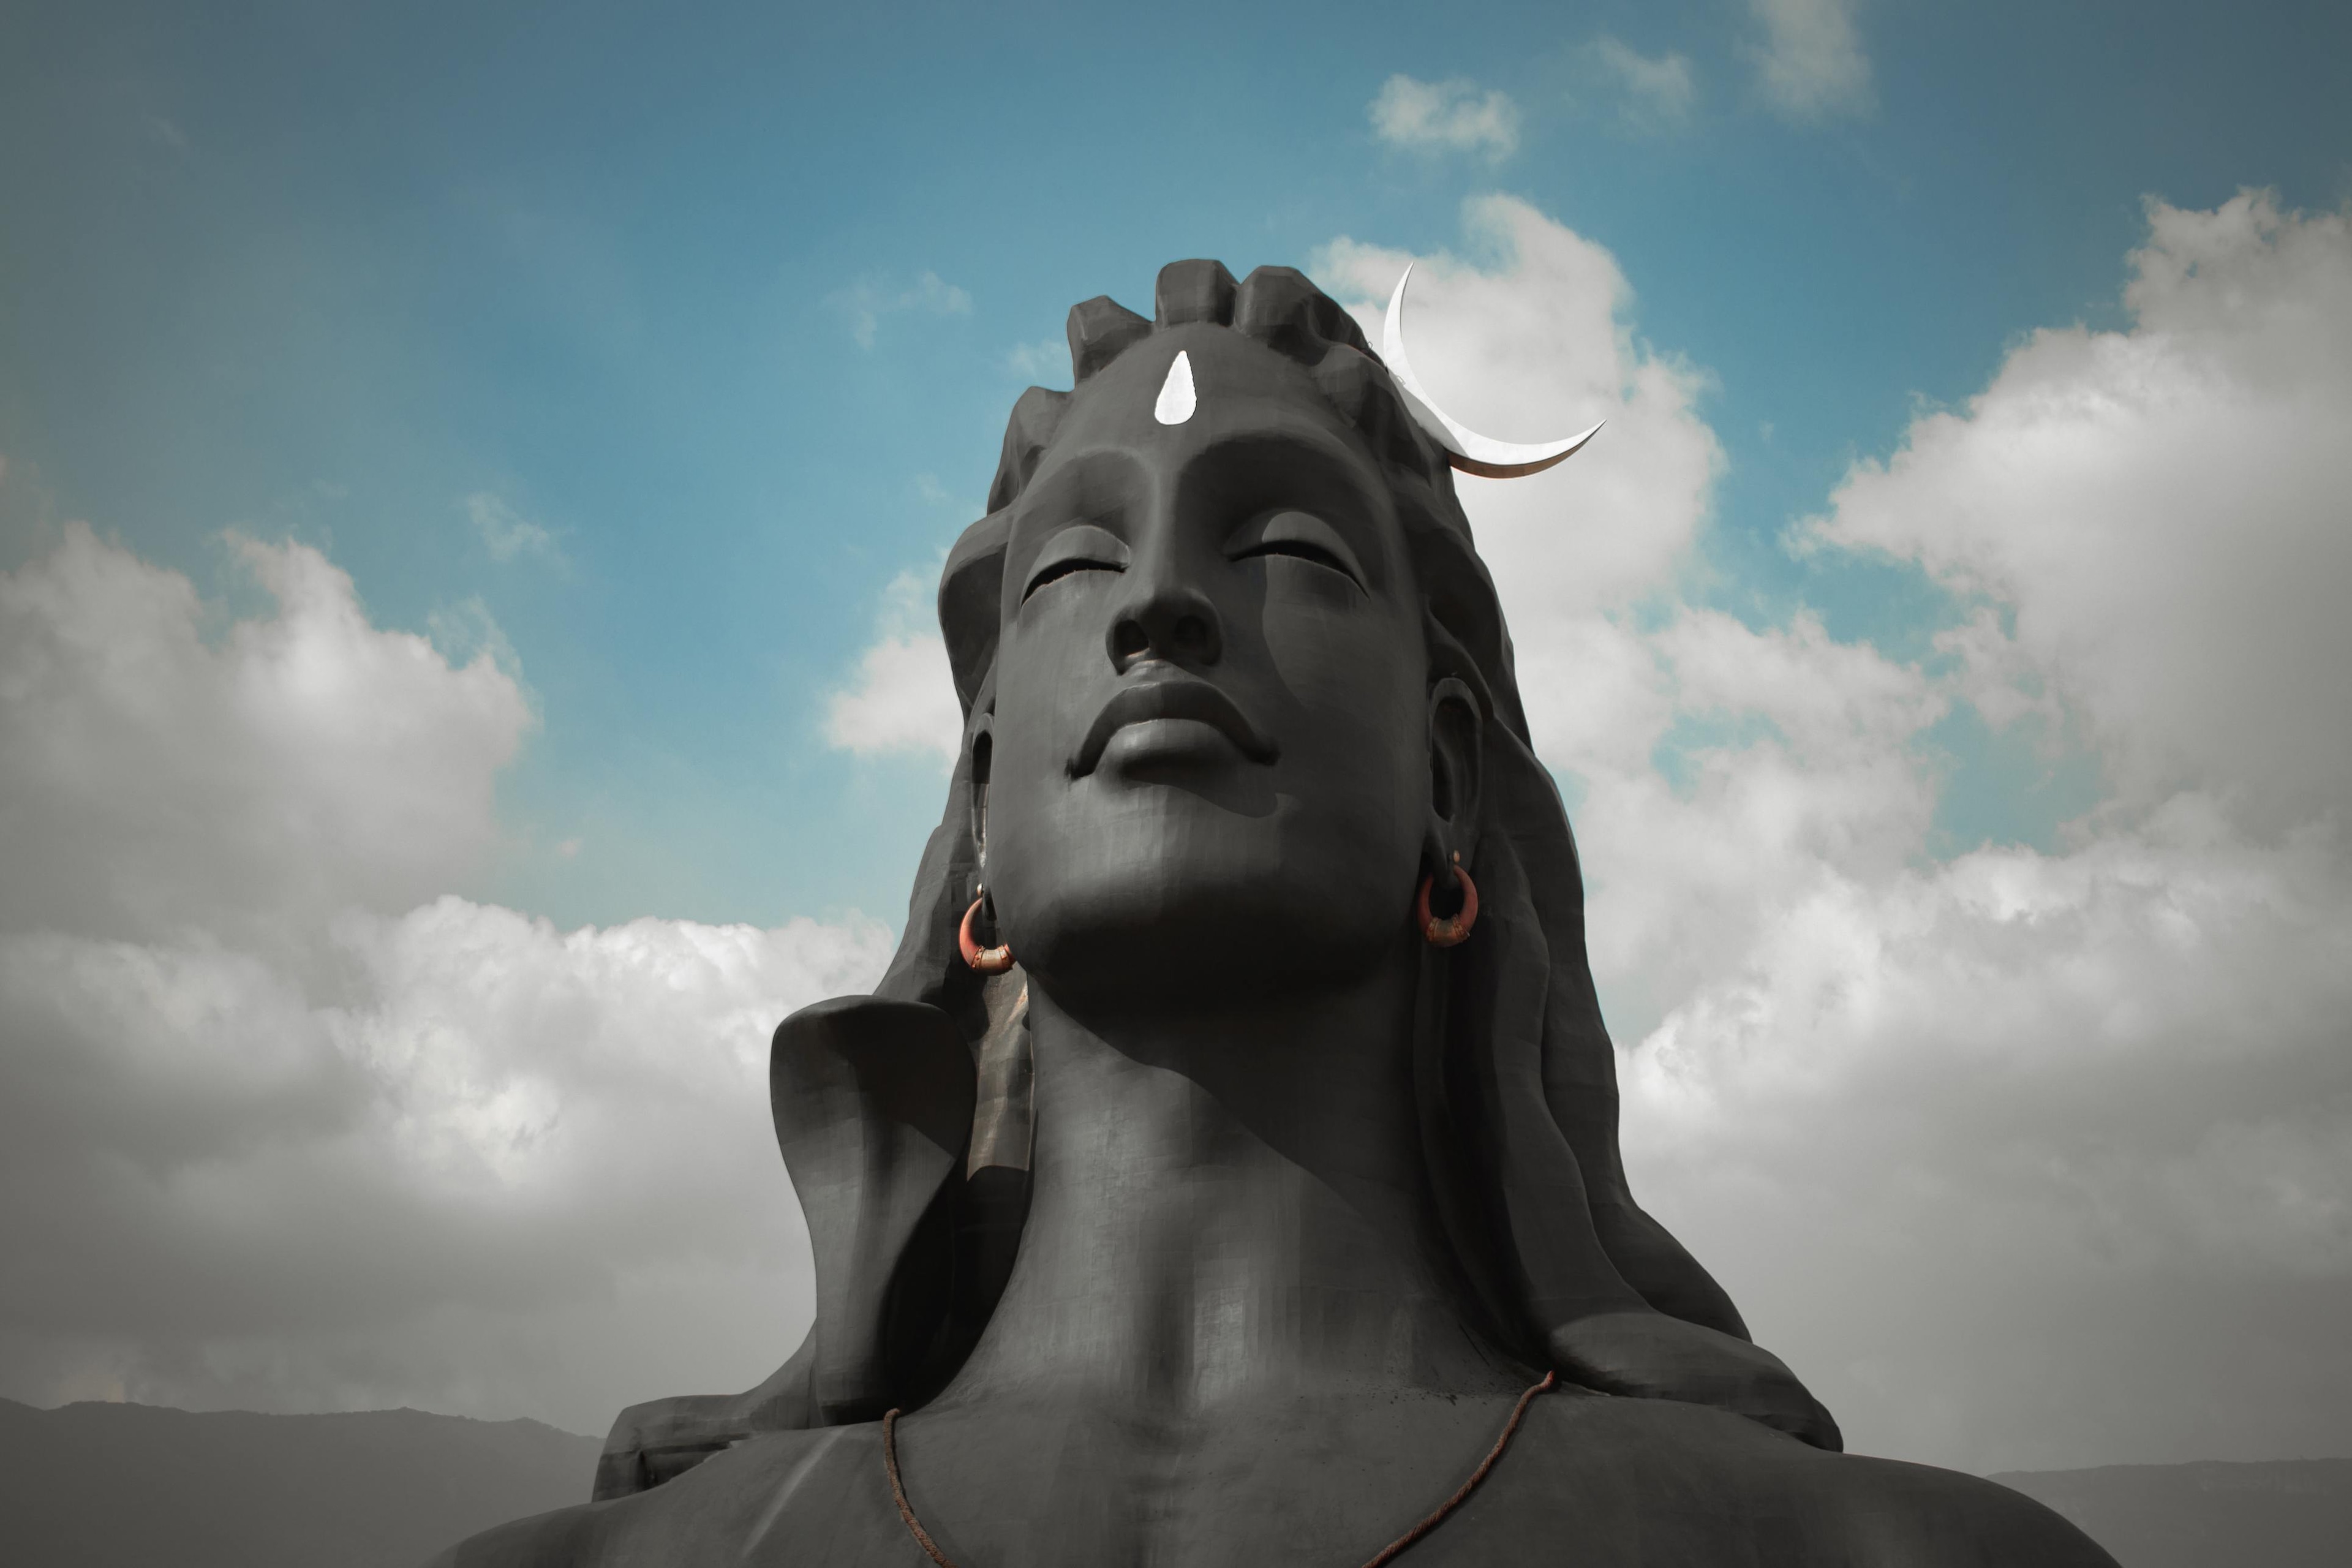 Adiyogi Shiva Statue, Coimbatore: Entry Fee, Timings, Directions